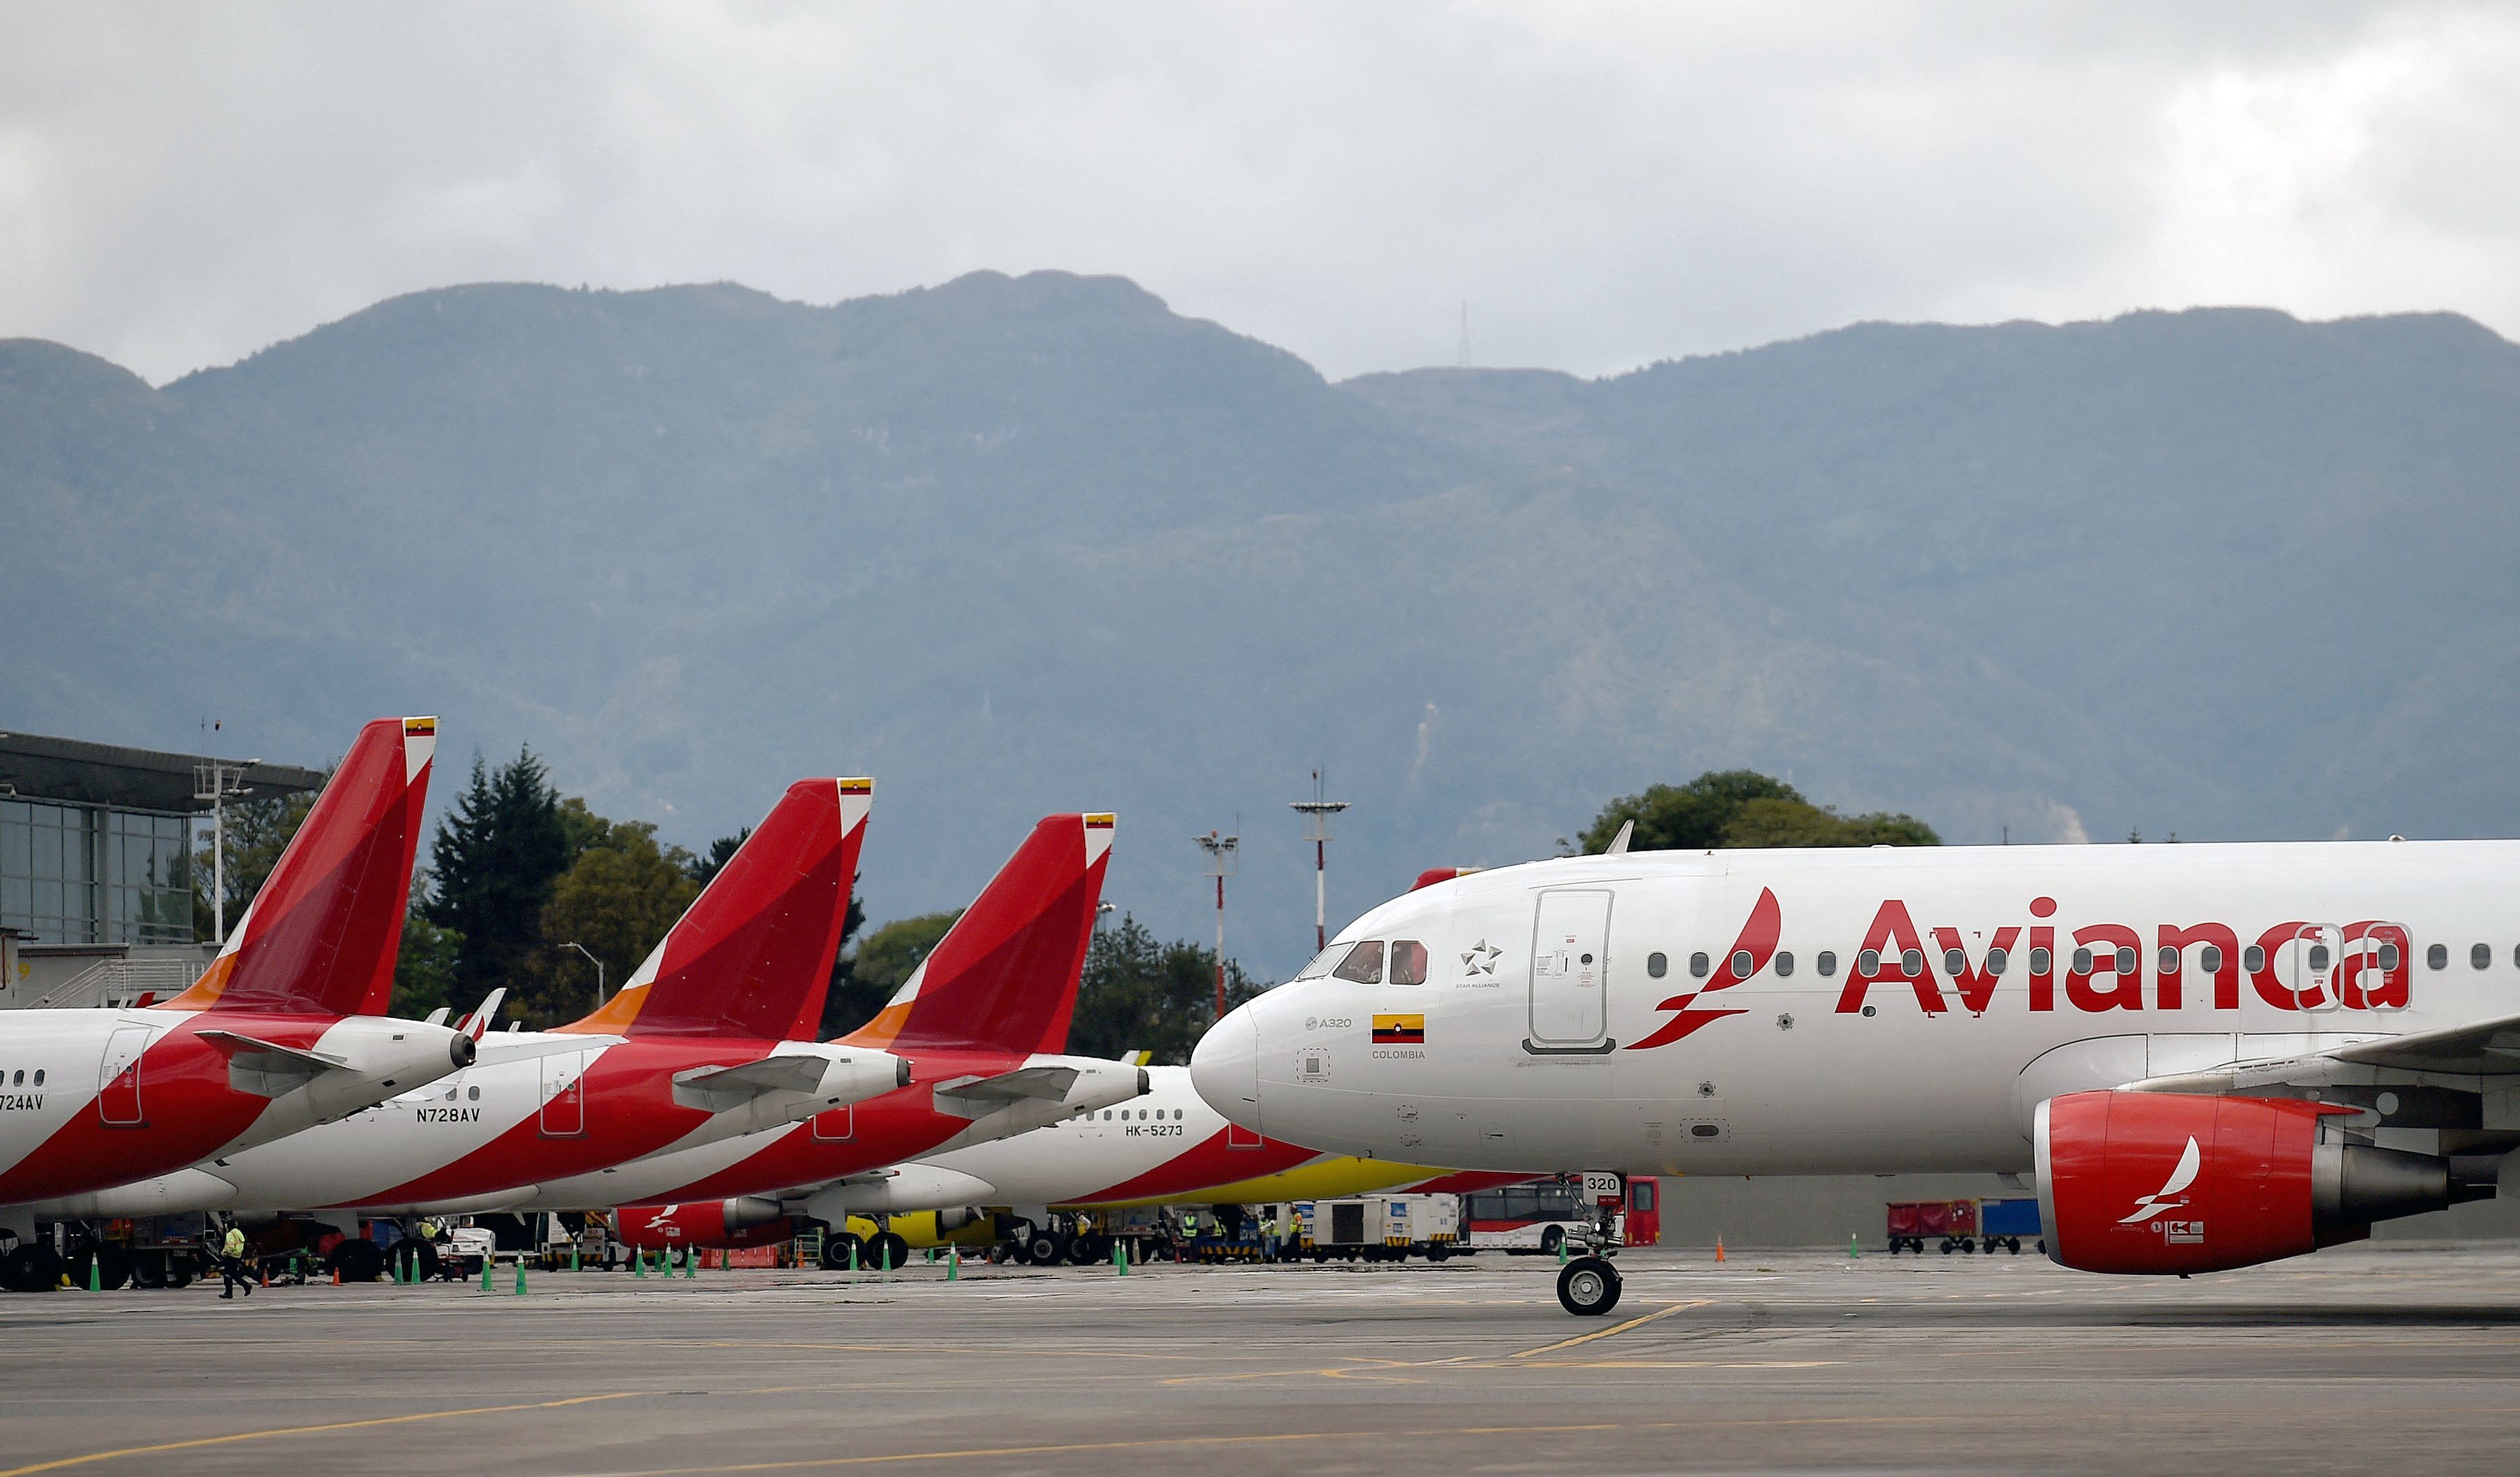 Several Avianca aircraft in Bogota